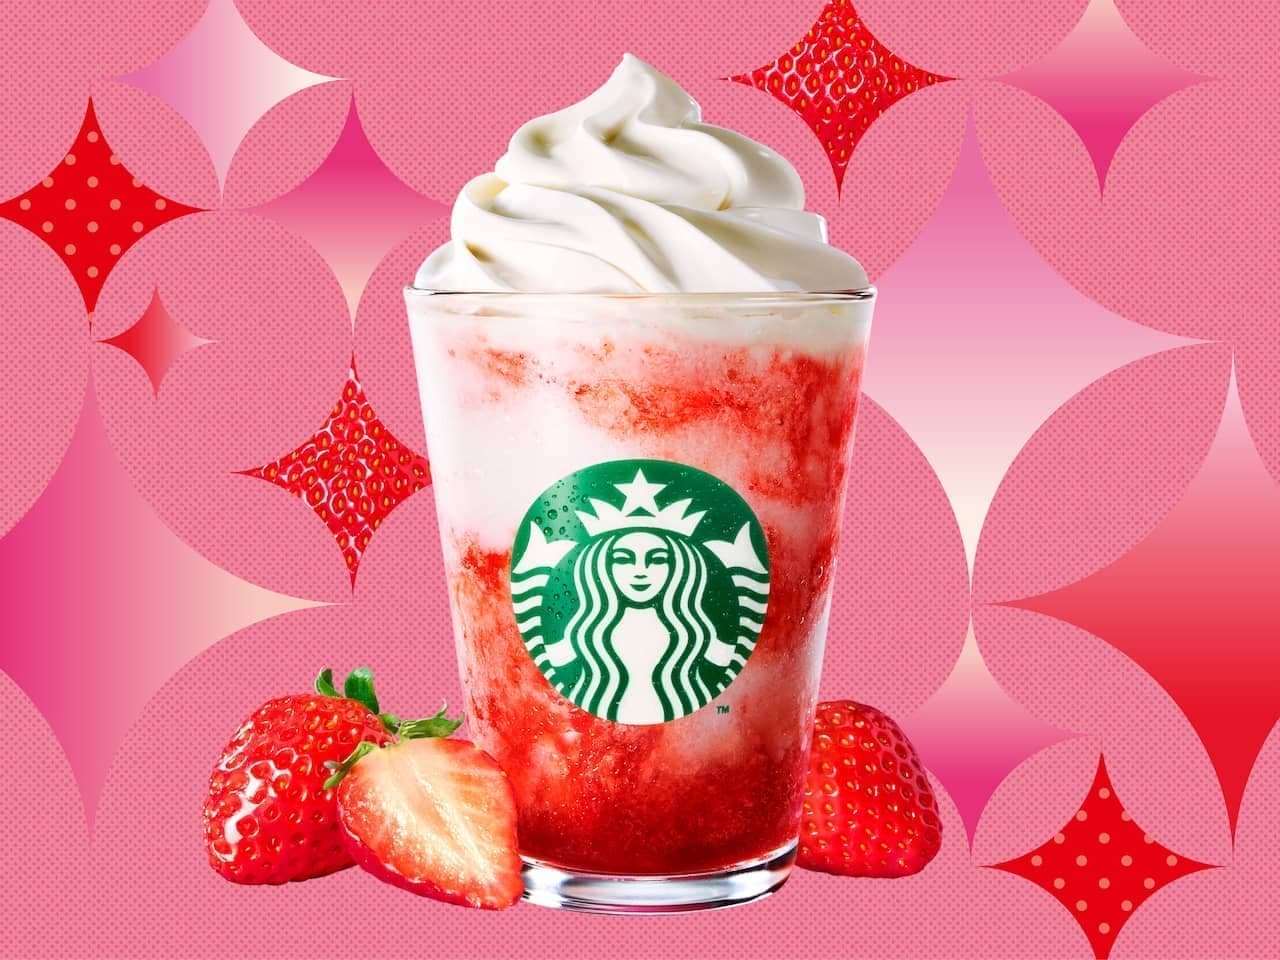 Starbucks "Starbucks Strawberry Frappuccino".